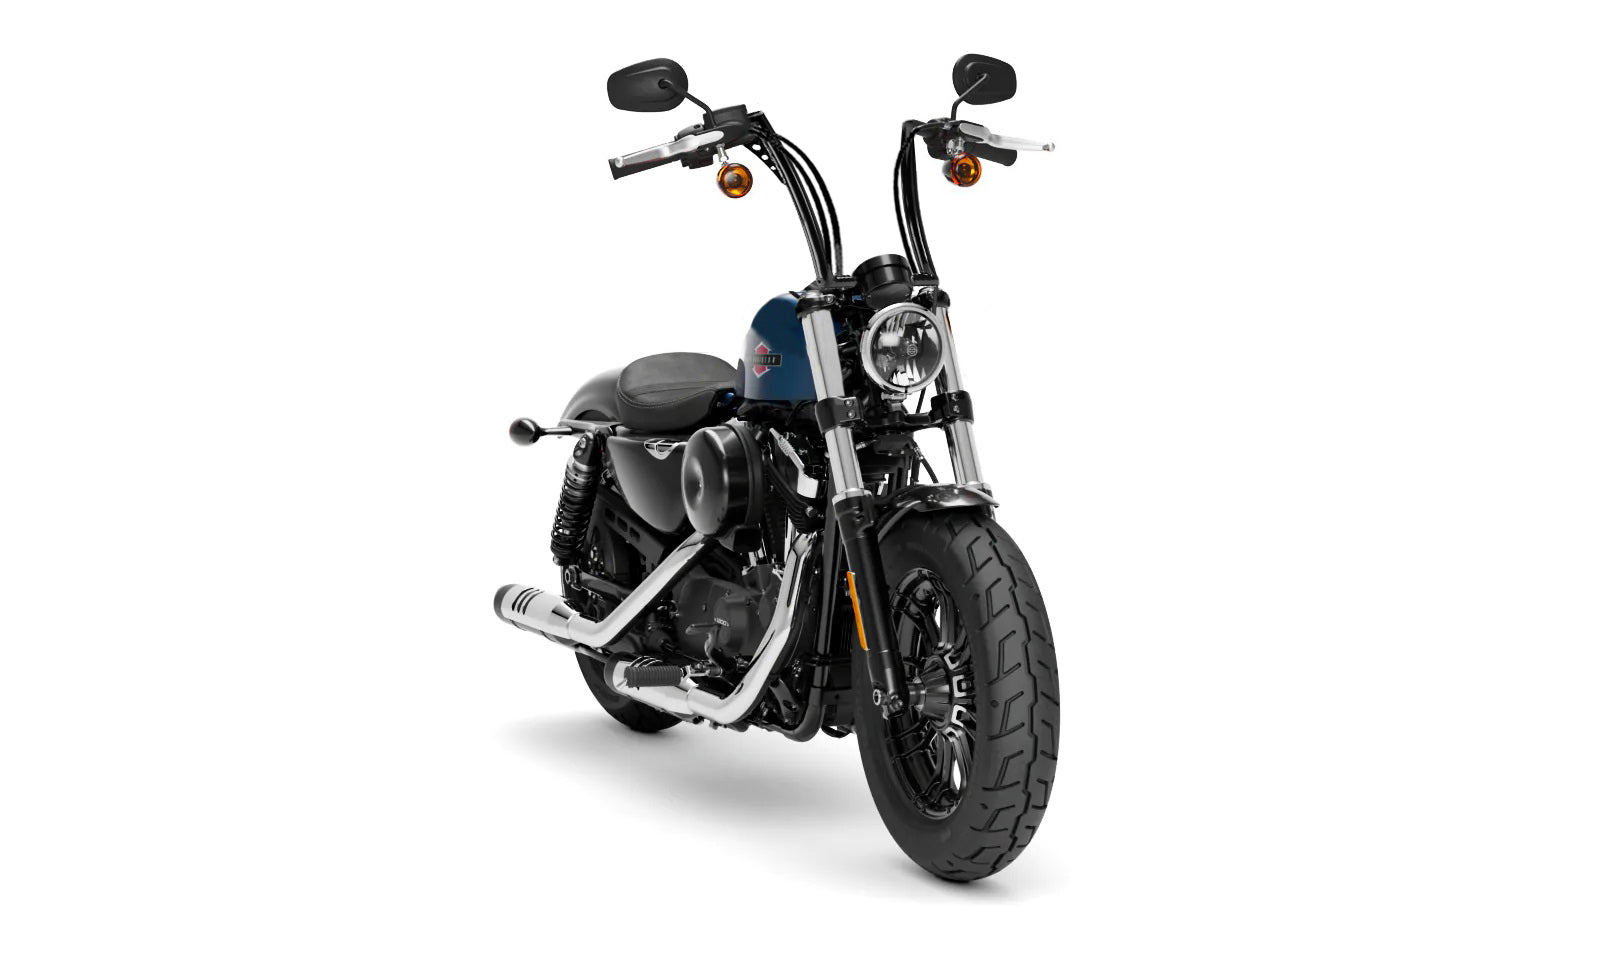 Viking Iron Born 12" Handlebar For Harley Sportster Forty Eight Gloss Black Bag on Bike View @expand